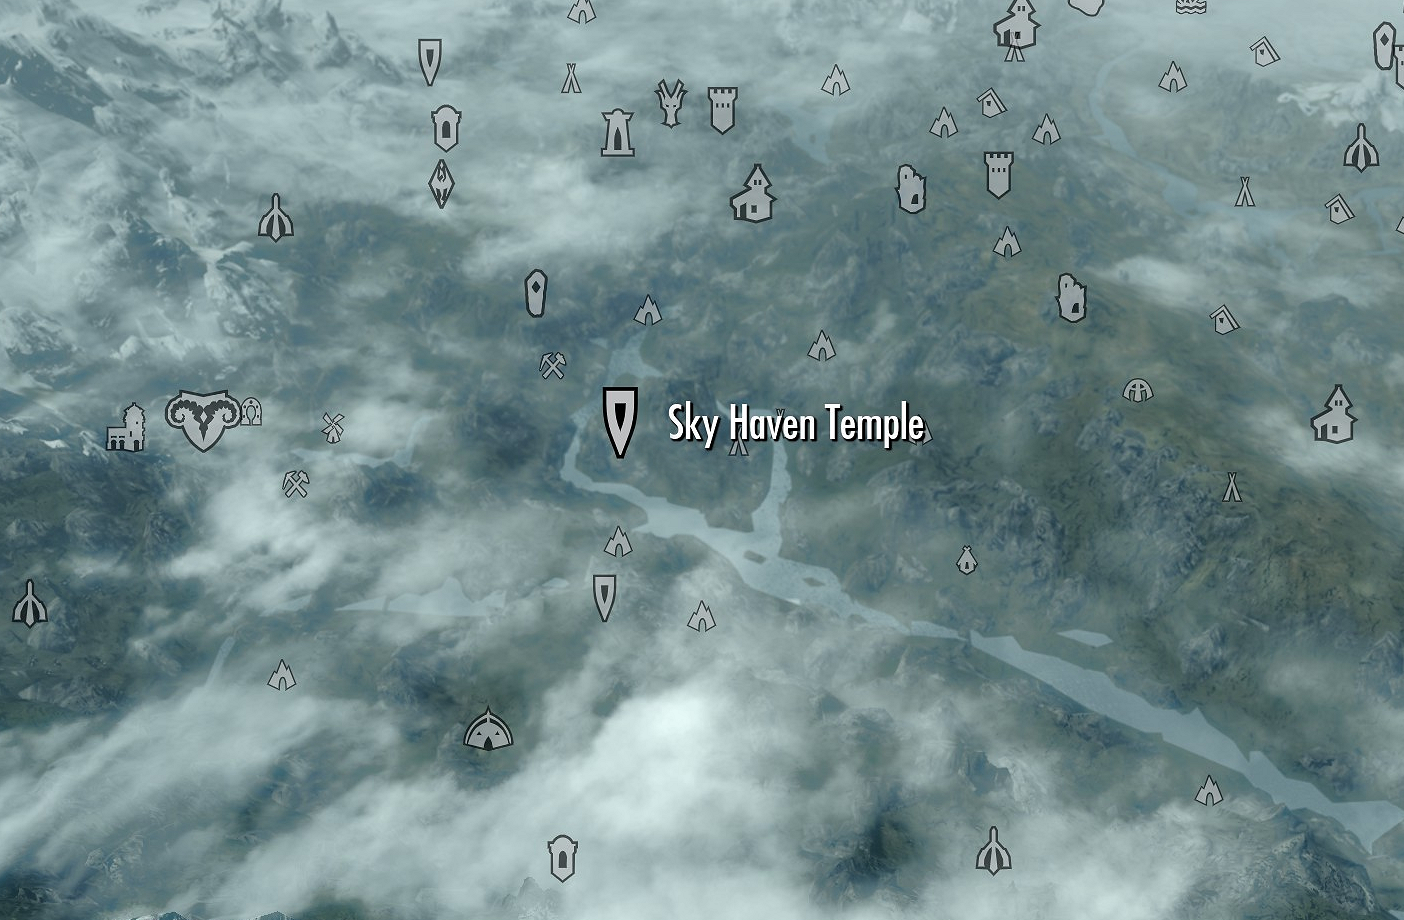 skyrim sky haven temple glitch